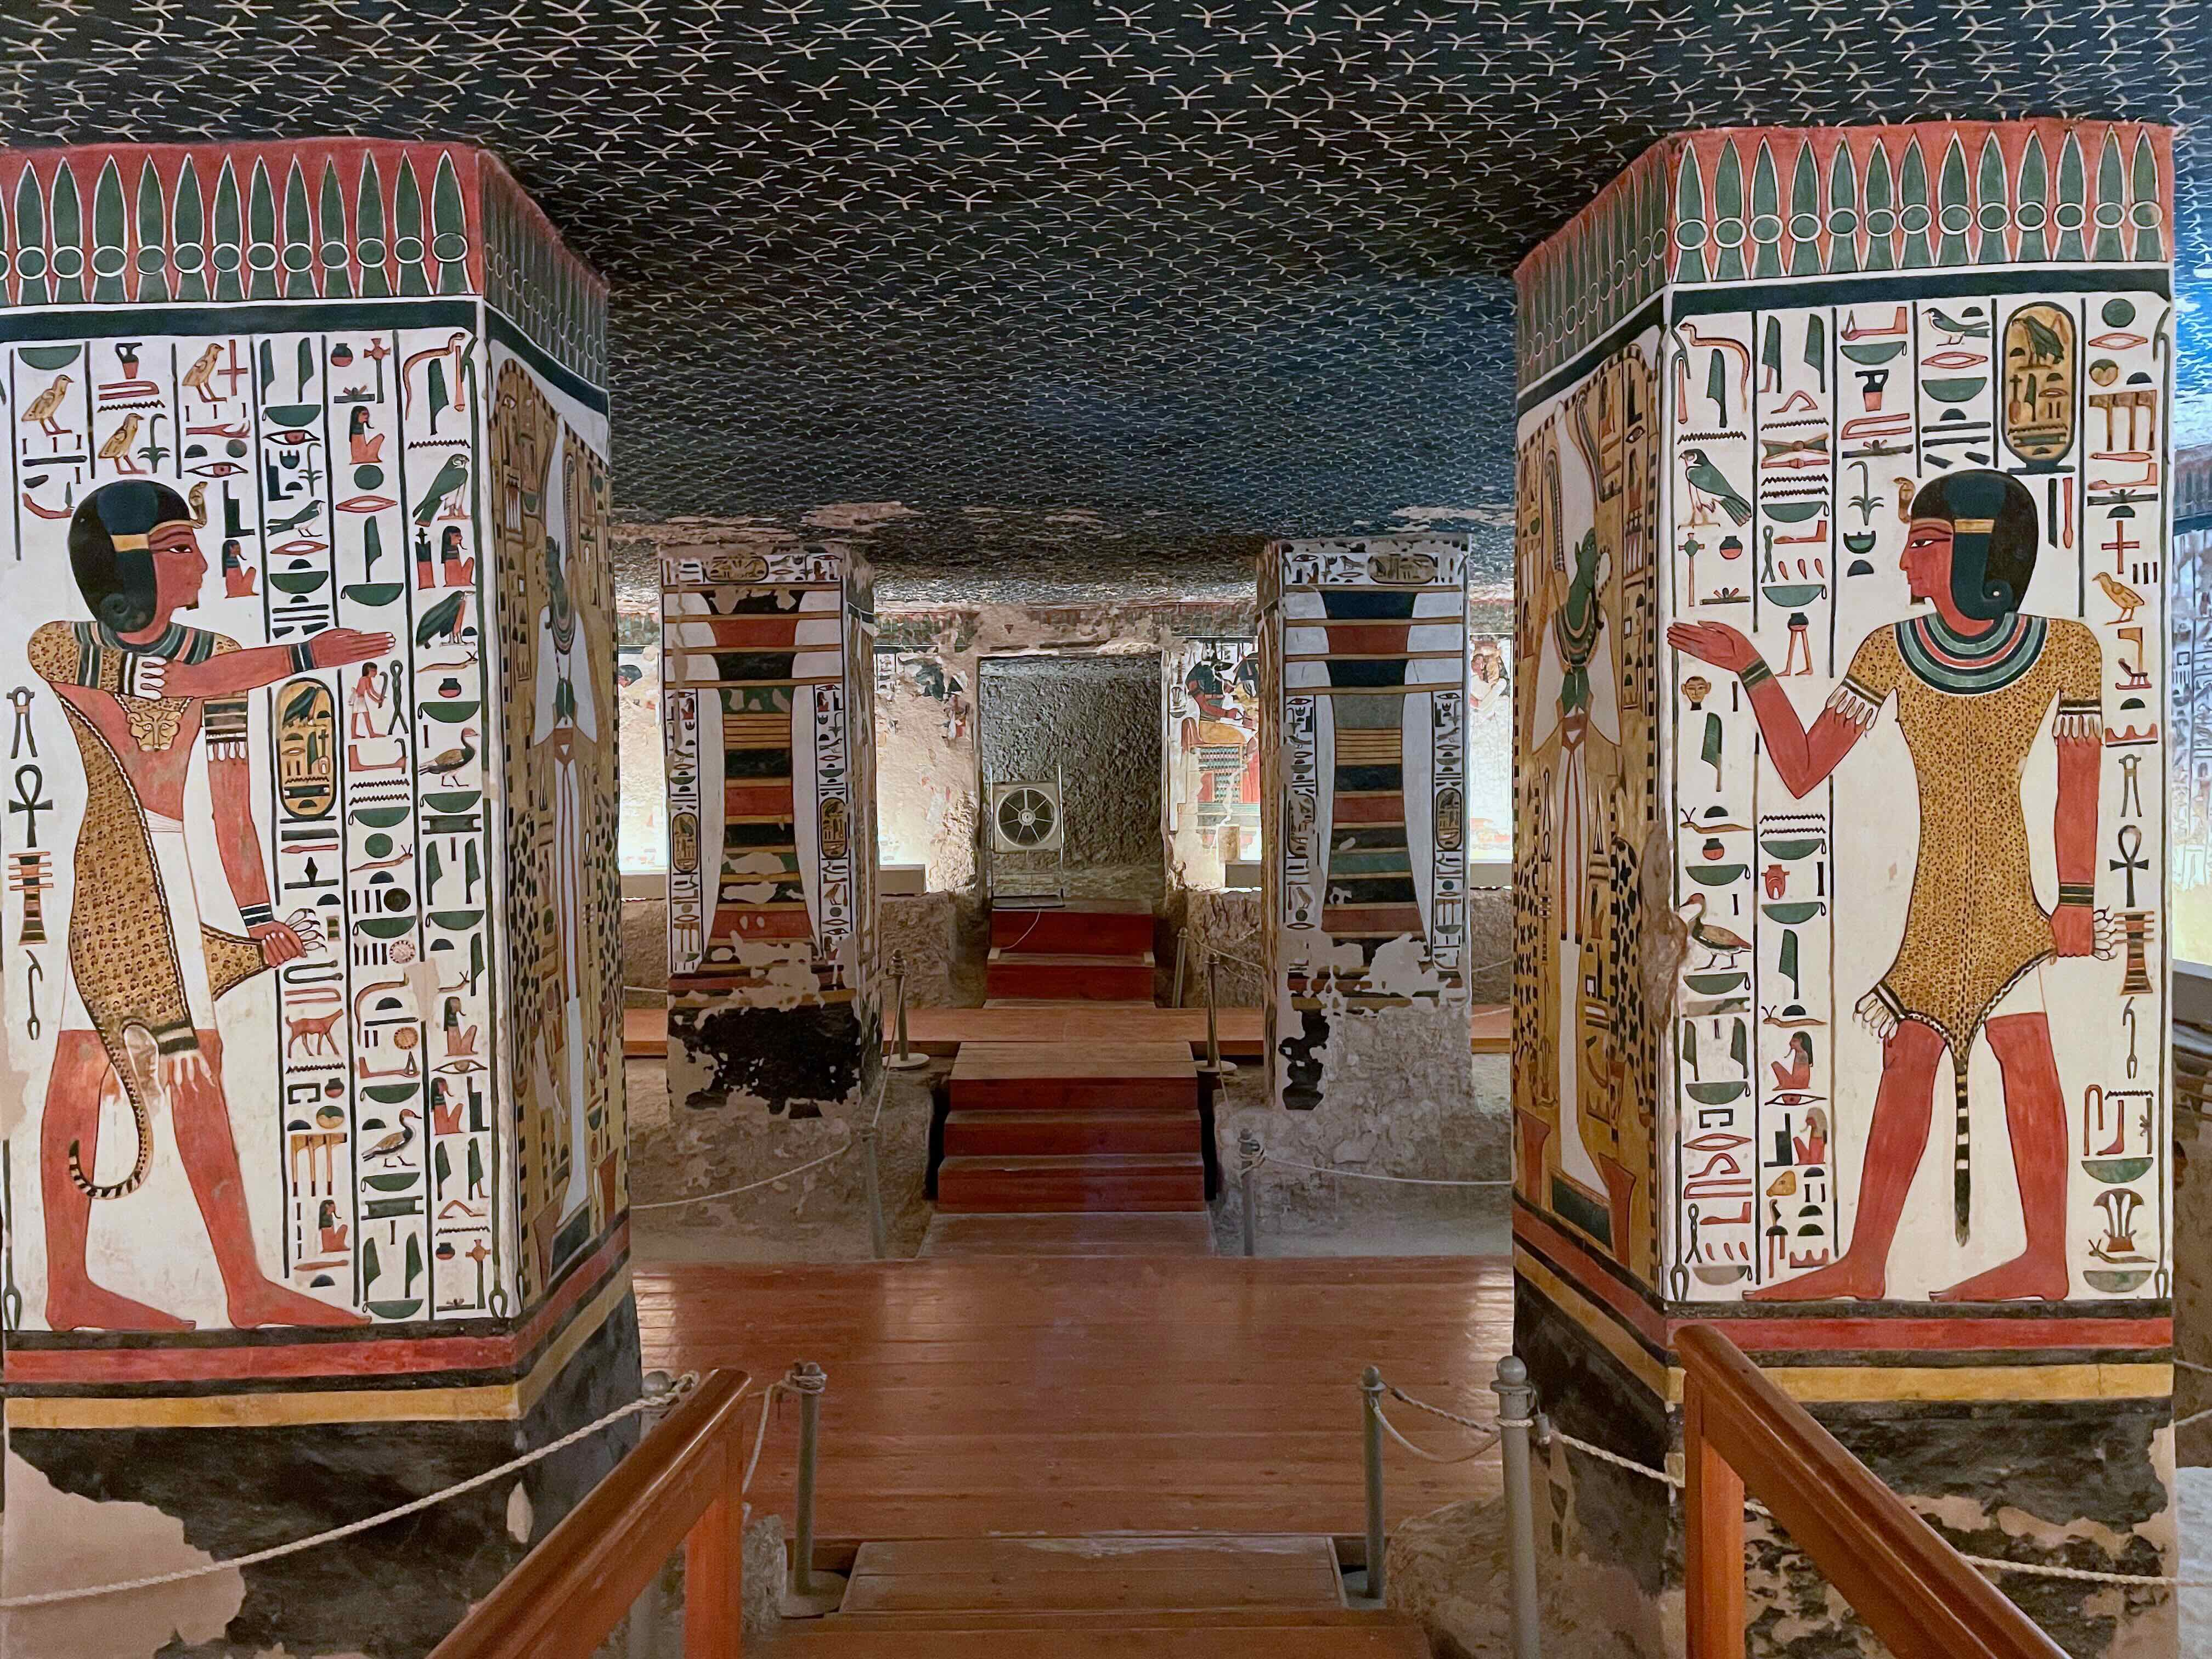 The tomb of Nefertari (QV66